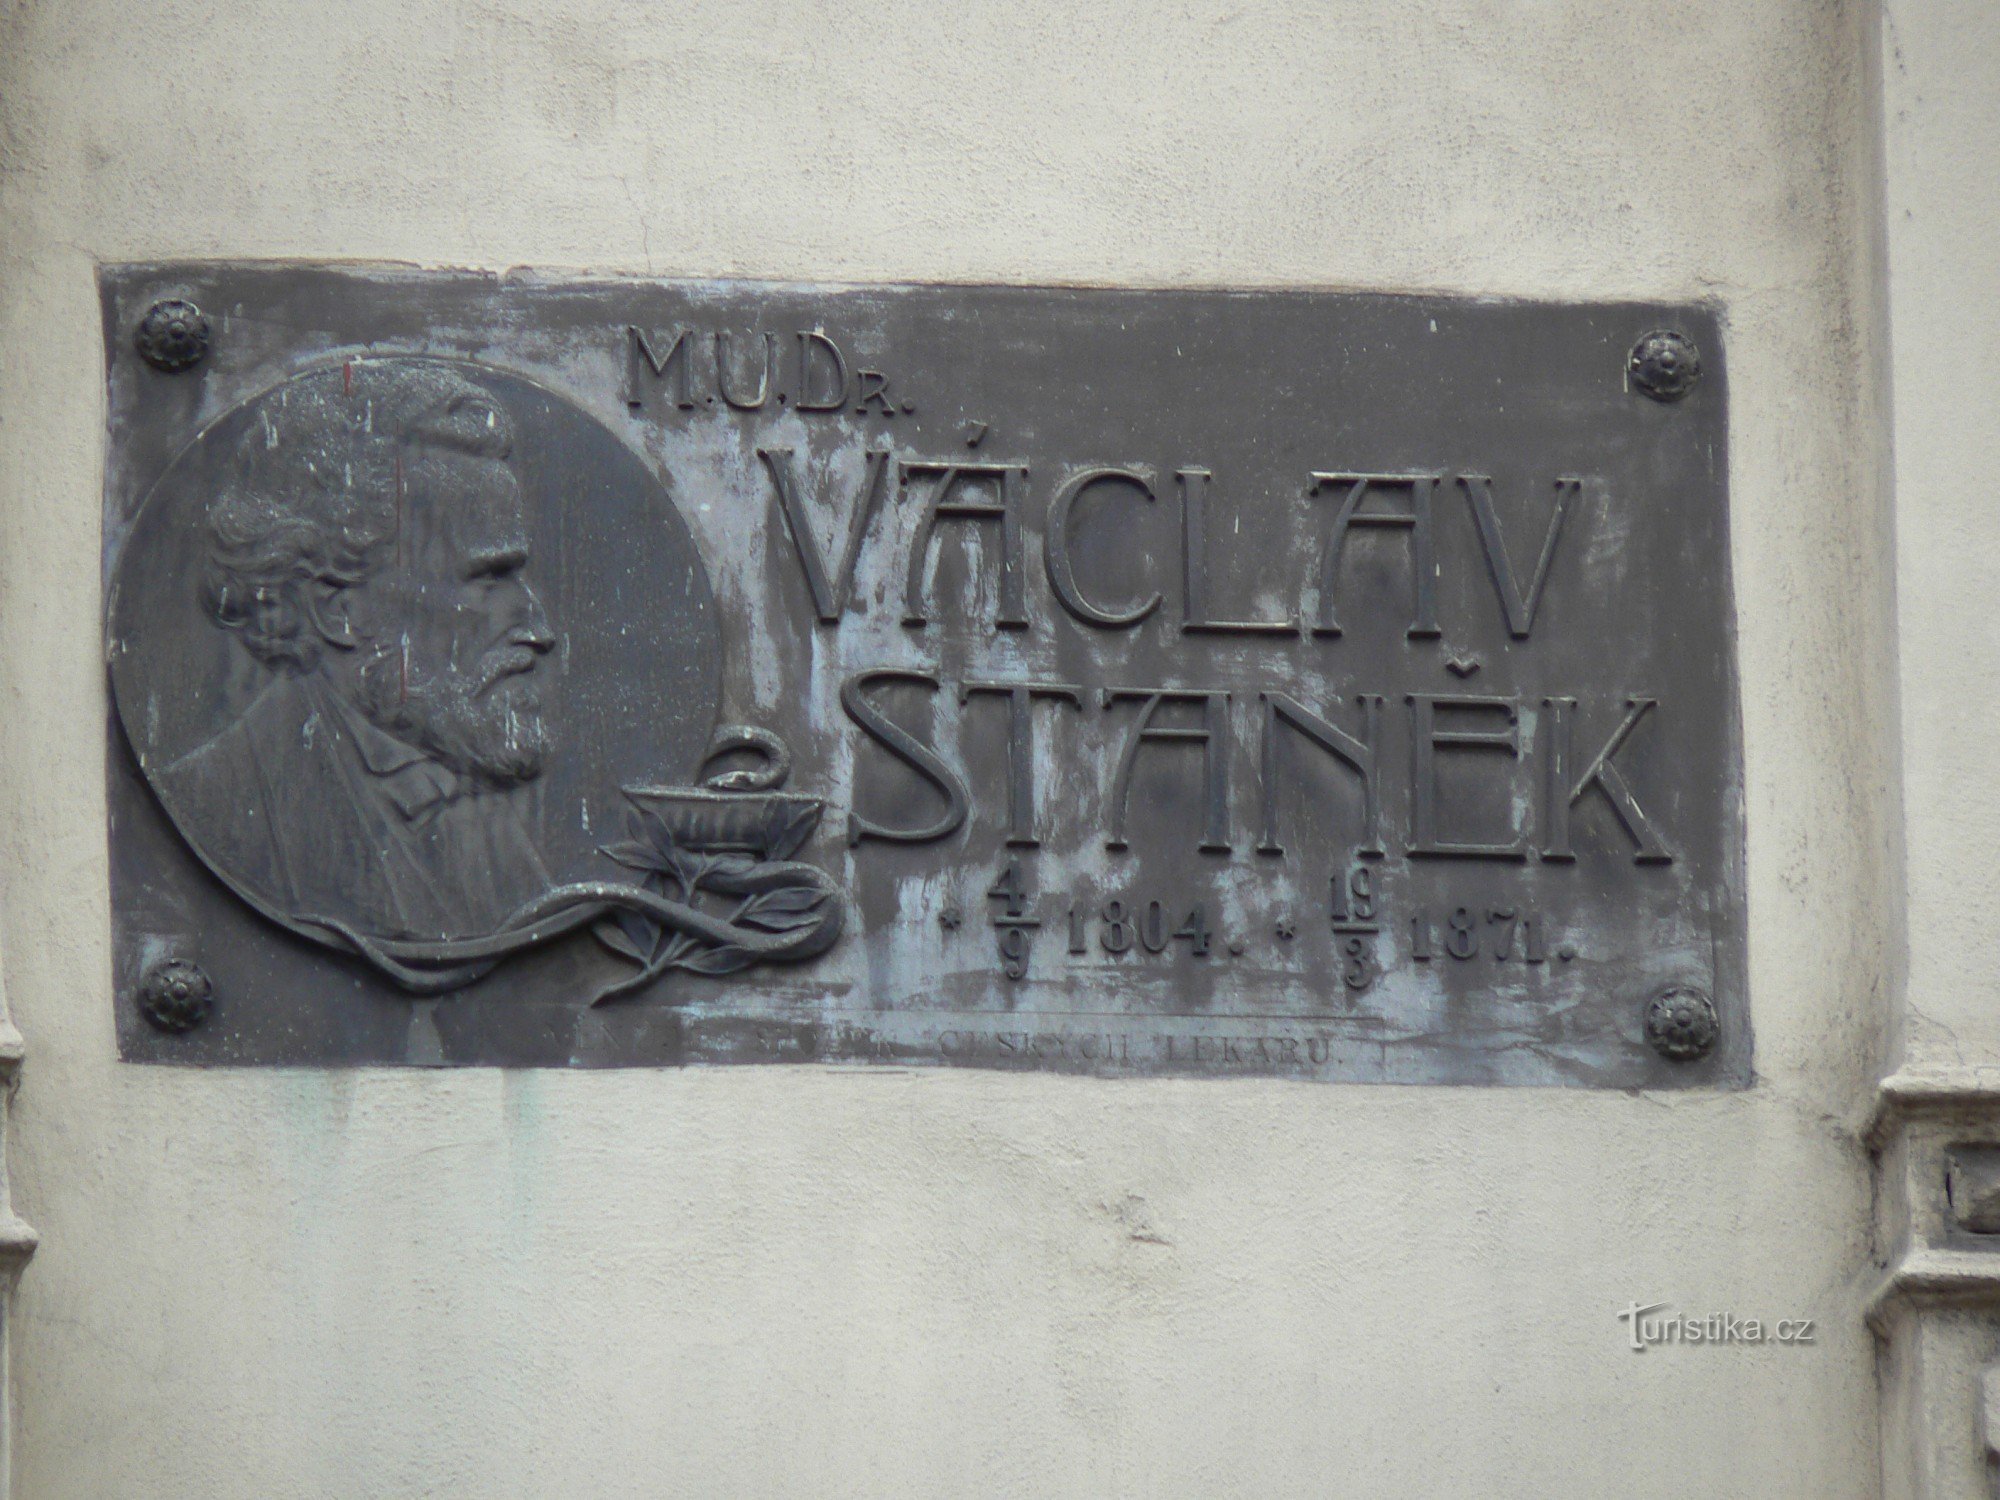 Tablica pamiątkowa MUDr. Wacław Stanek